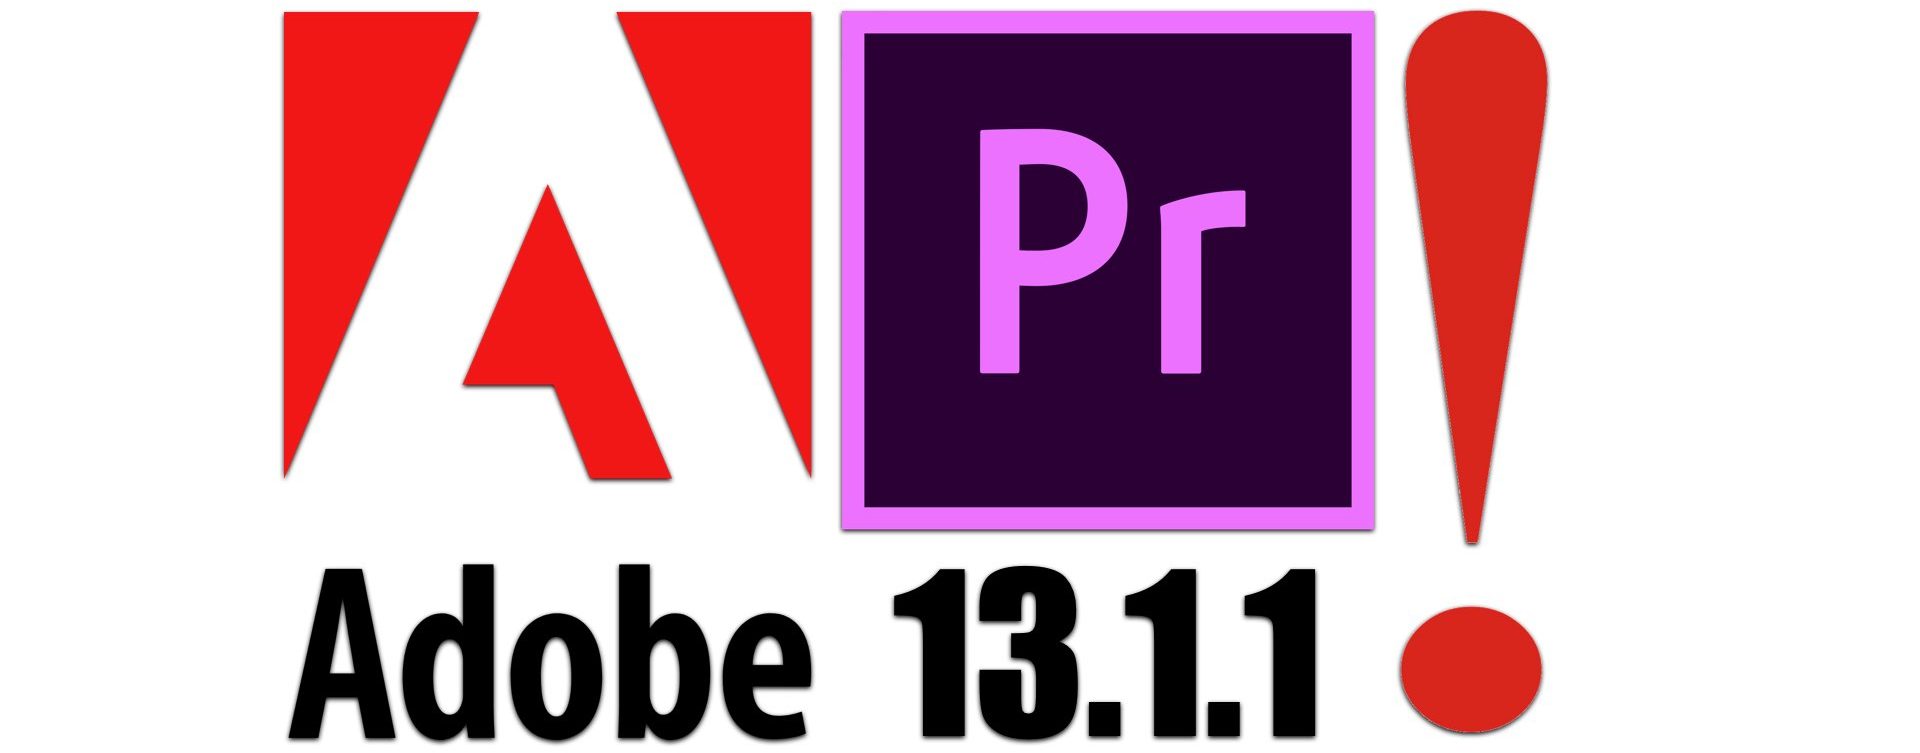 Adobe Premiere Pro 13.1: Full of critical bugs